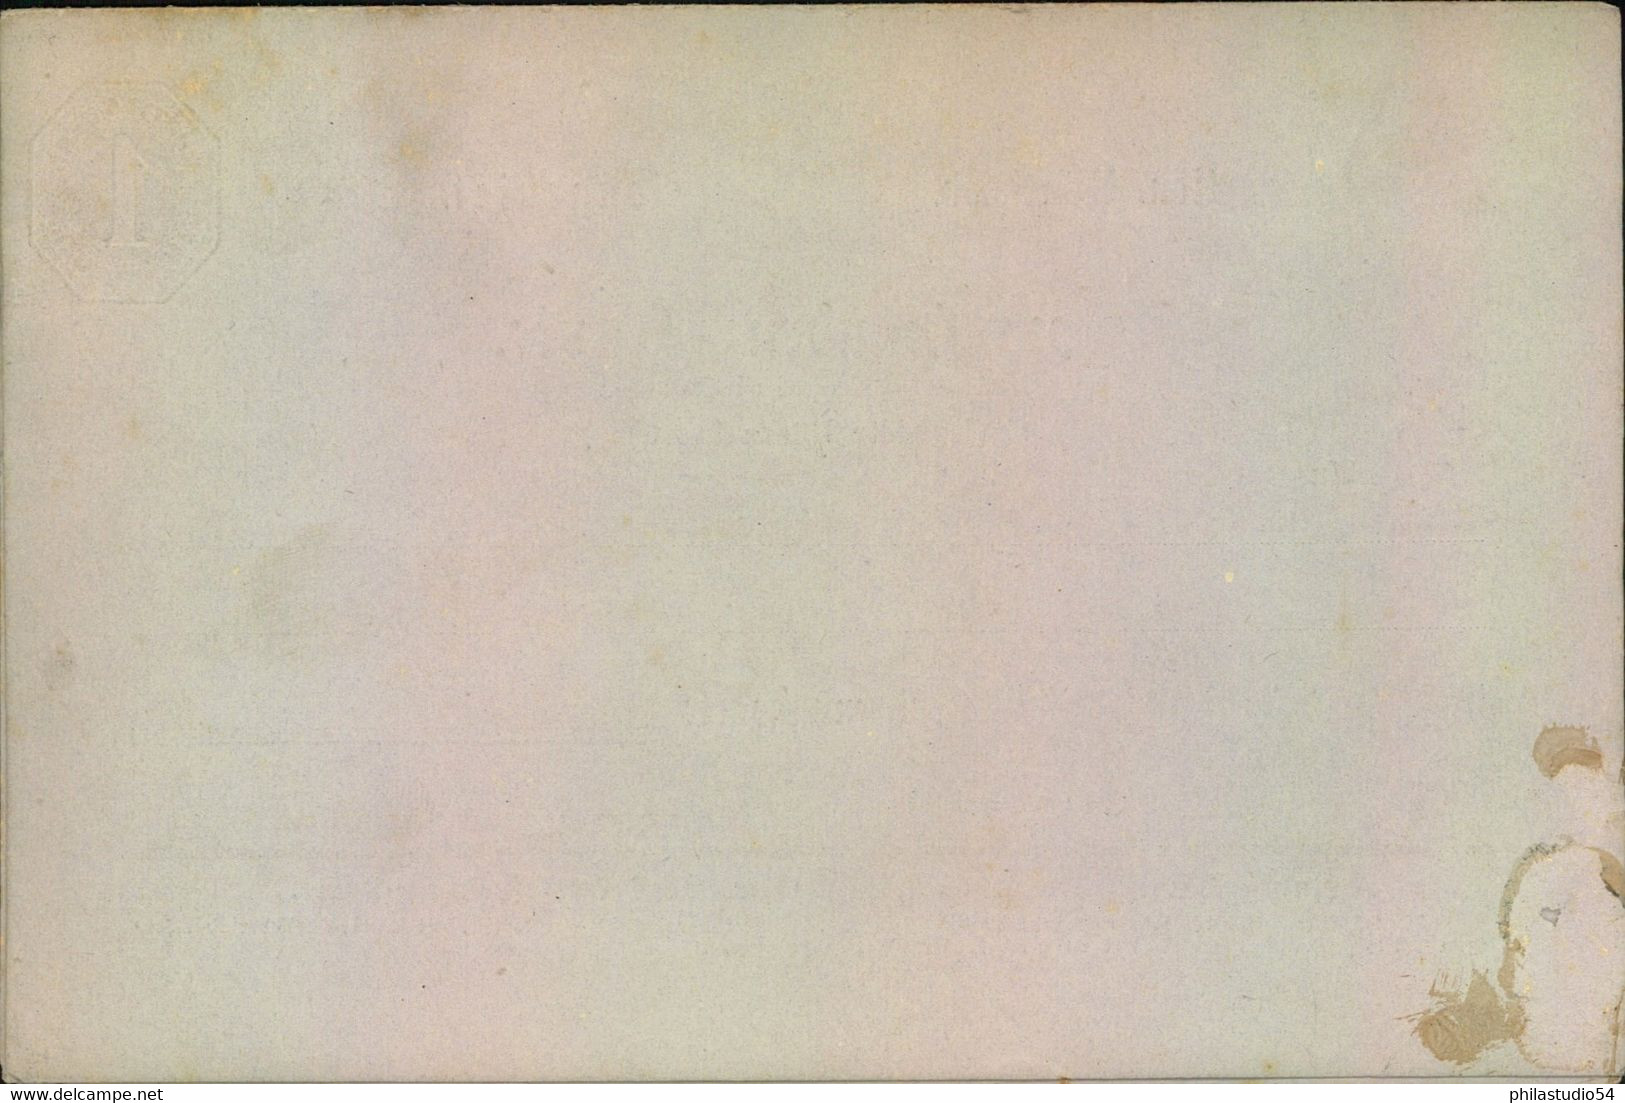 1871, 1 Kreuzer Correspndent -Karte Sauber Ungebraucht - Postwaardestukken